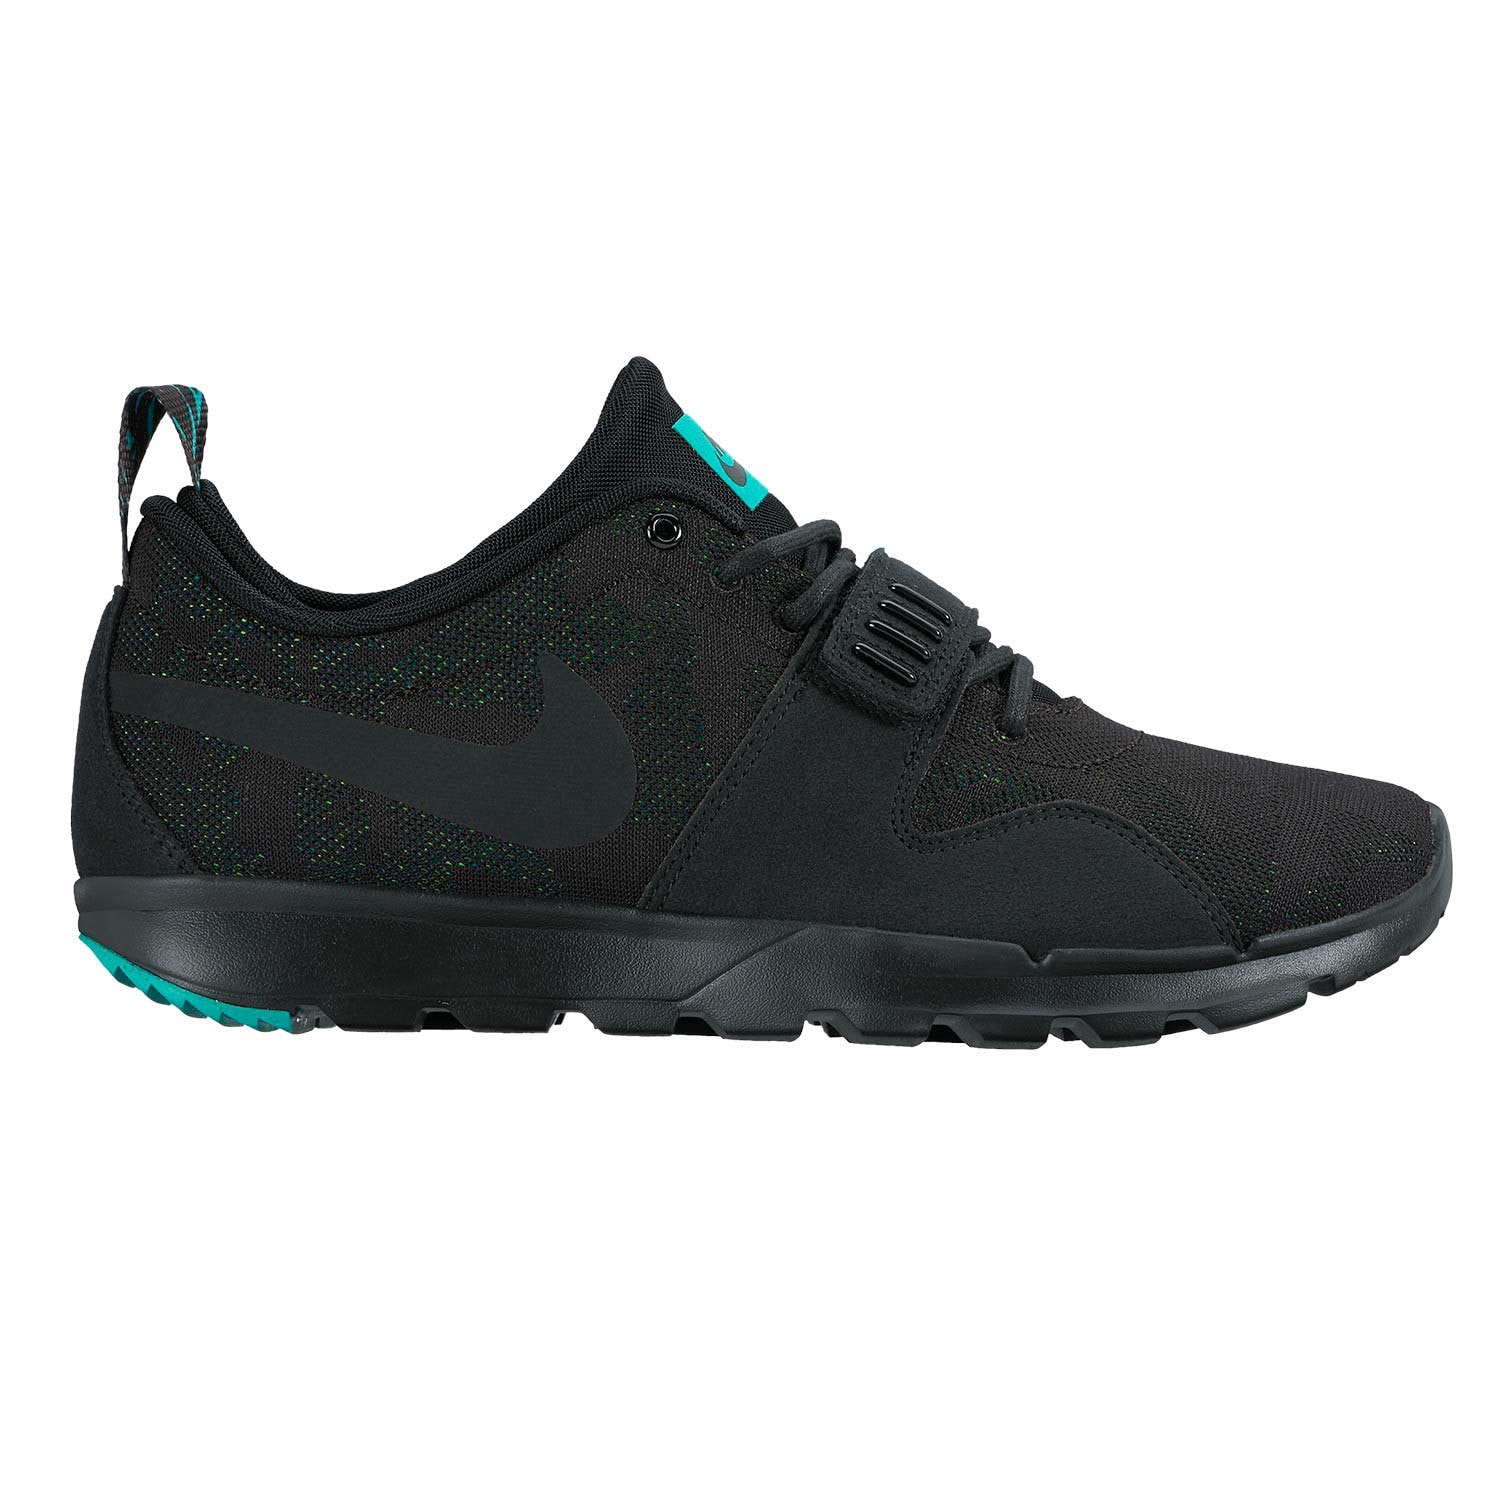 Sneakers Nike SB Trainerendor black/black-clear jade-volt | Zezula